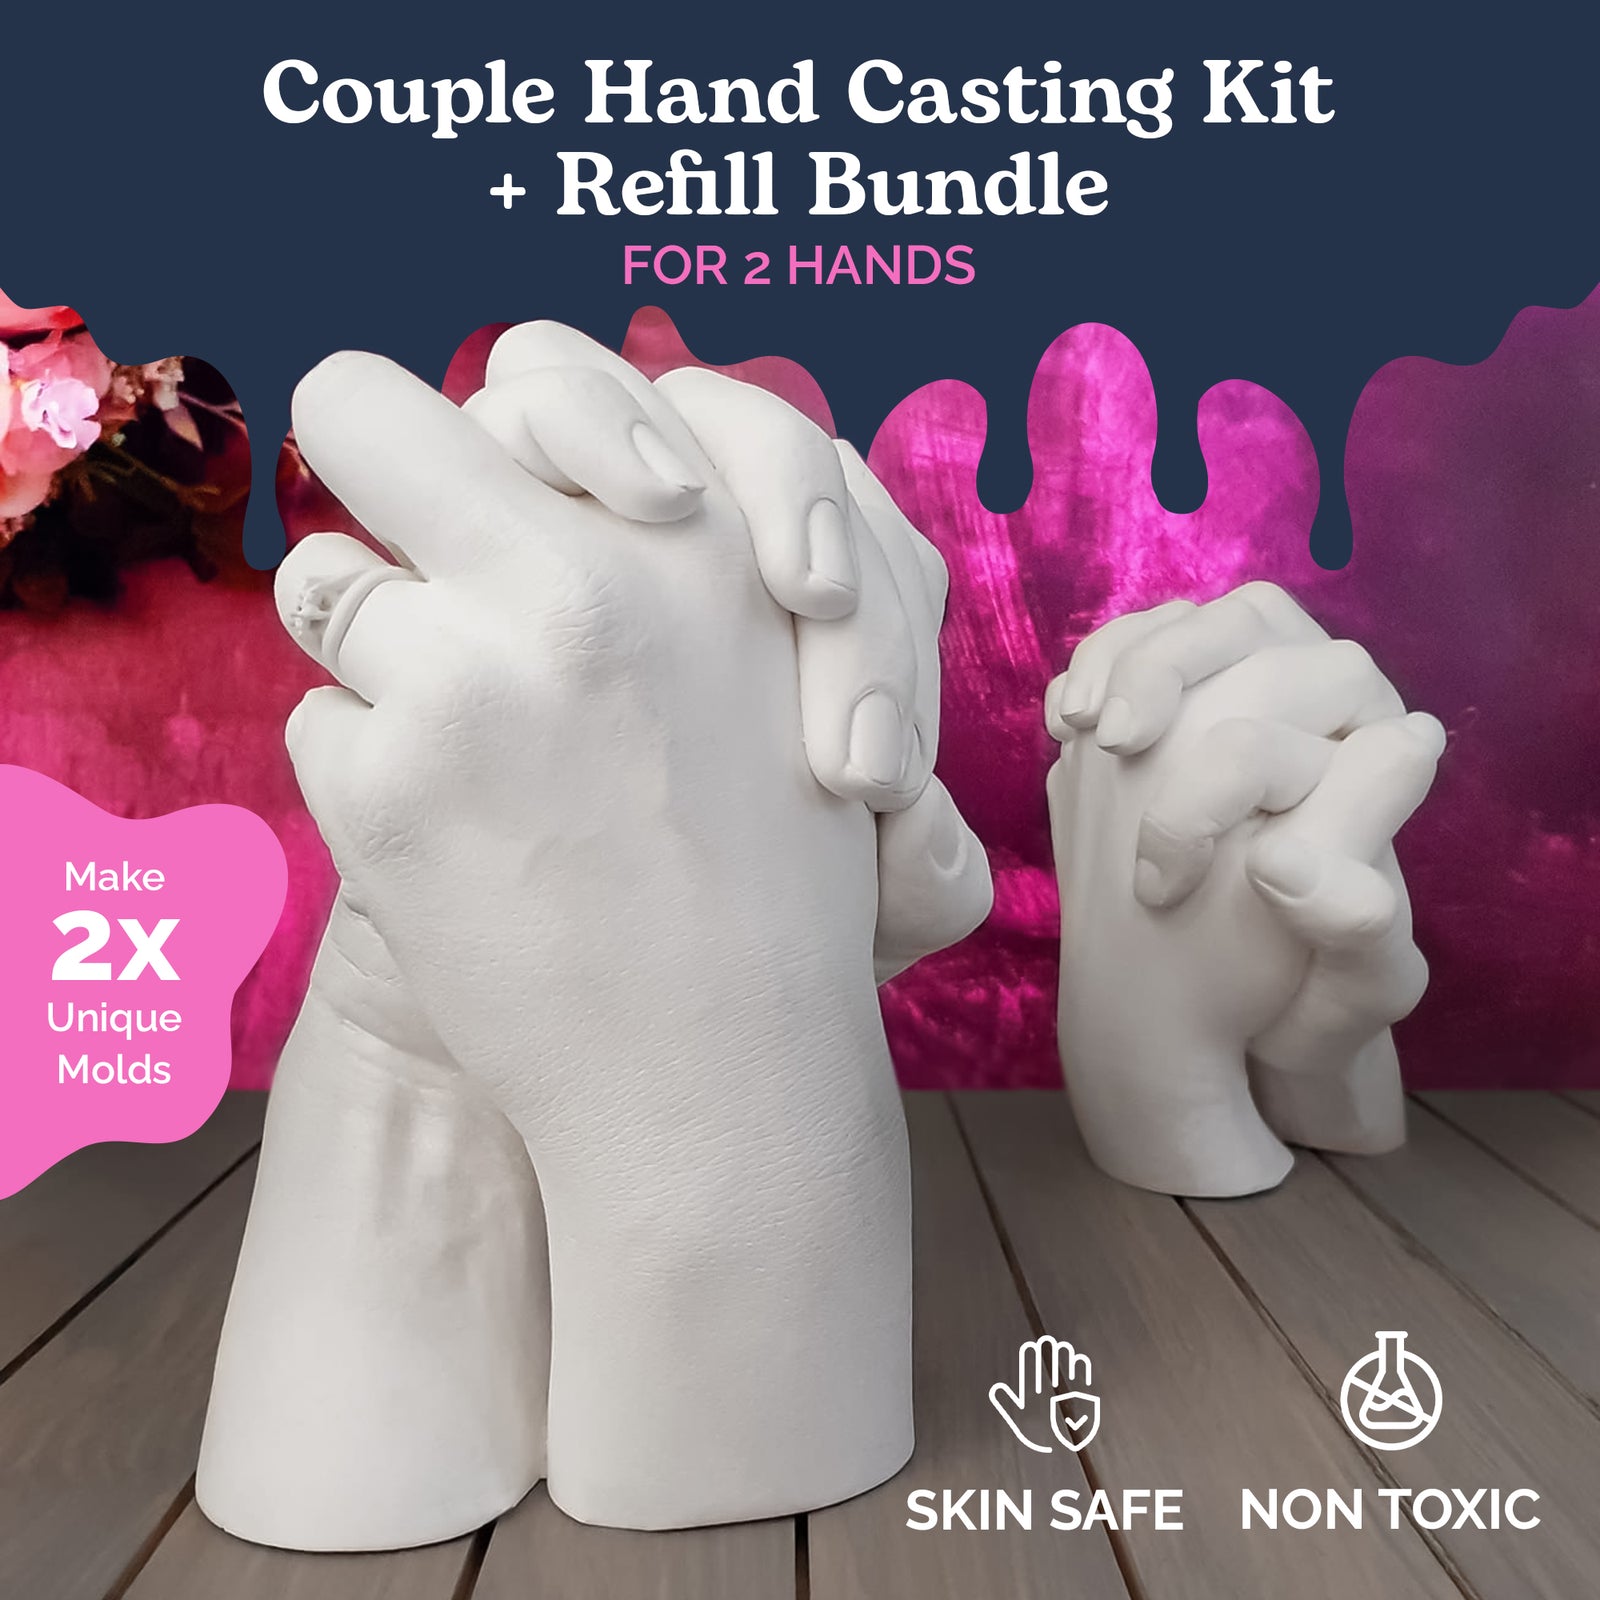 Edinburgh Casting Studio - XL Family Hand Casting Kit for 4-6 People for Mom - Fun DIY Family Lifelike Heirloom Statue Sculpture - Hand Mold Wedding